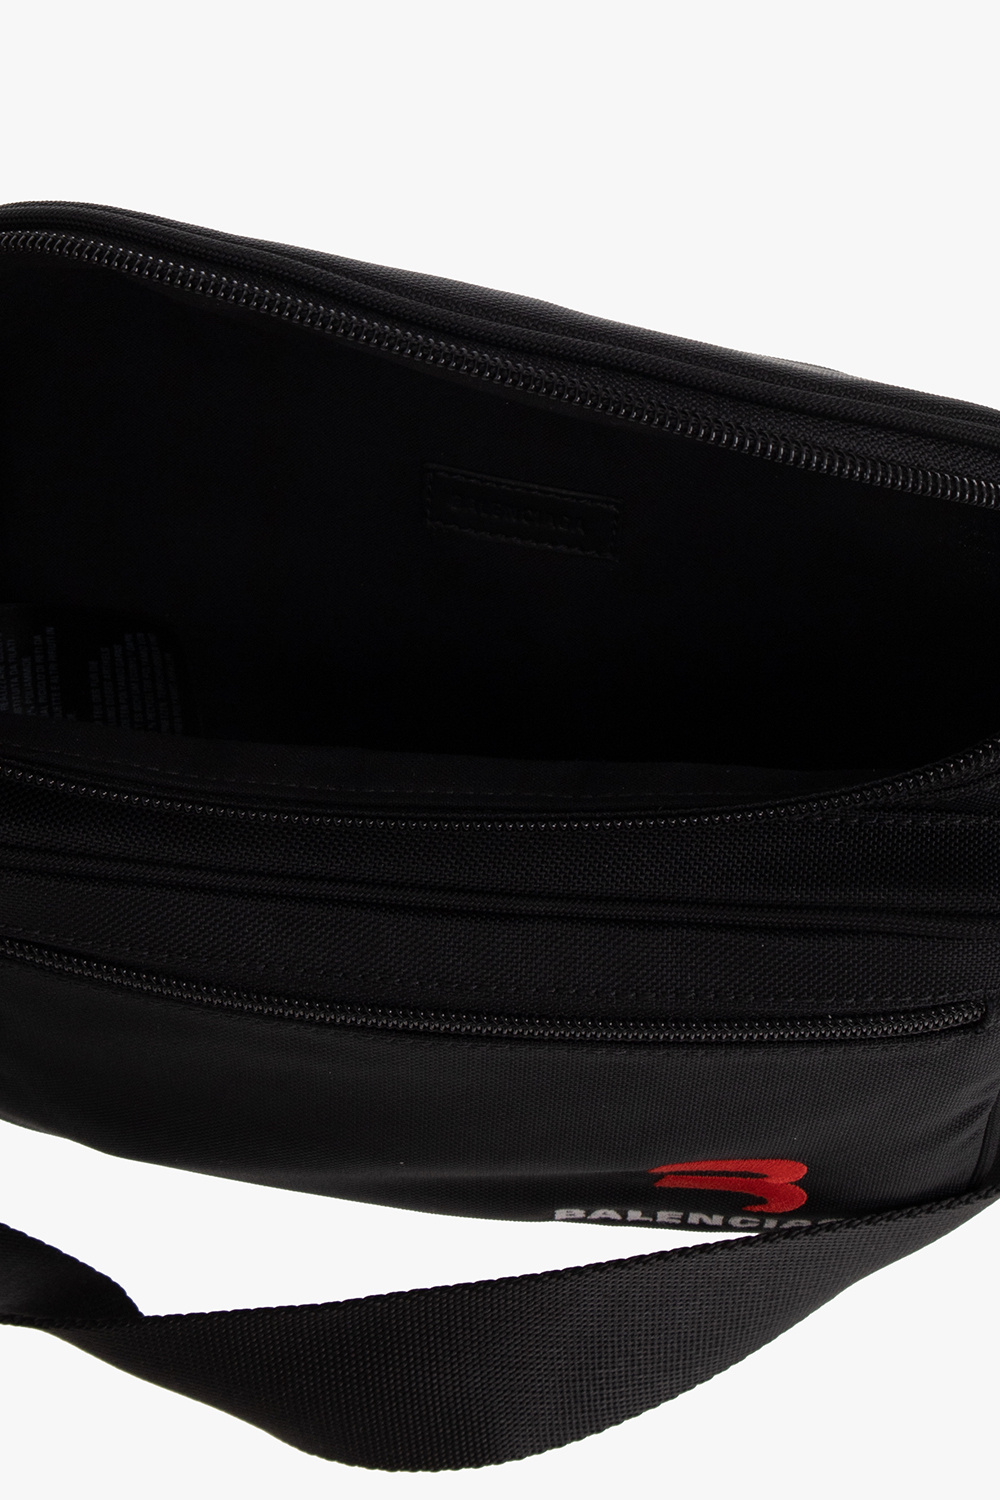 Balenciaga ‘Explorer’ belt WITH bag